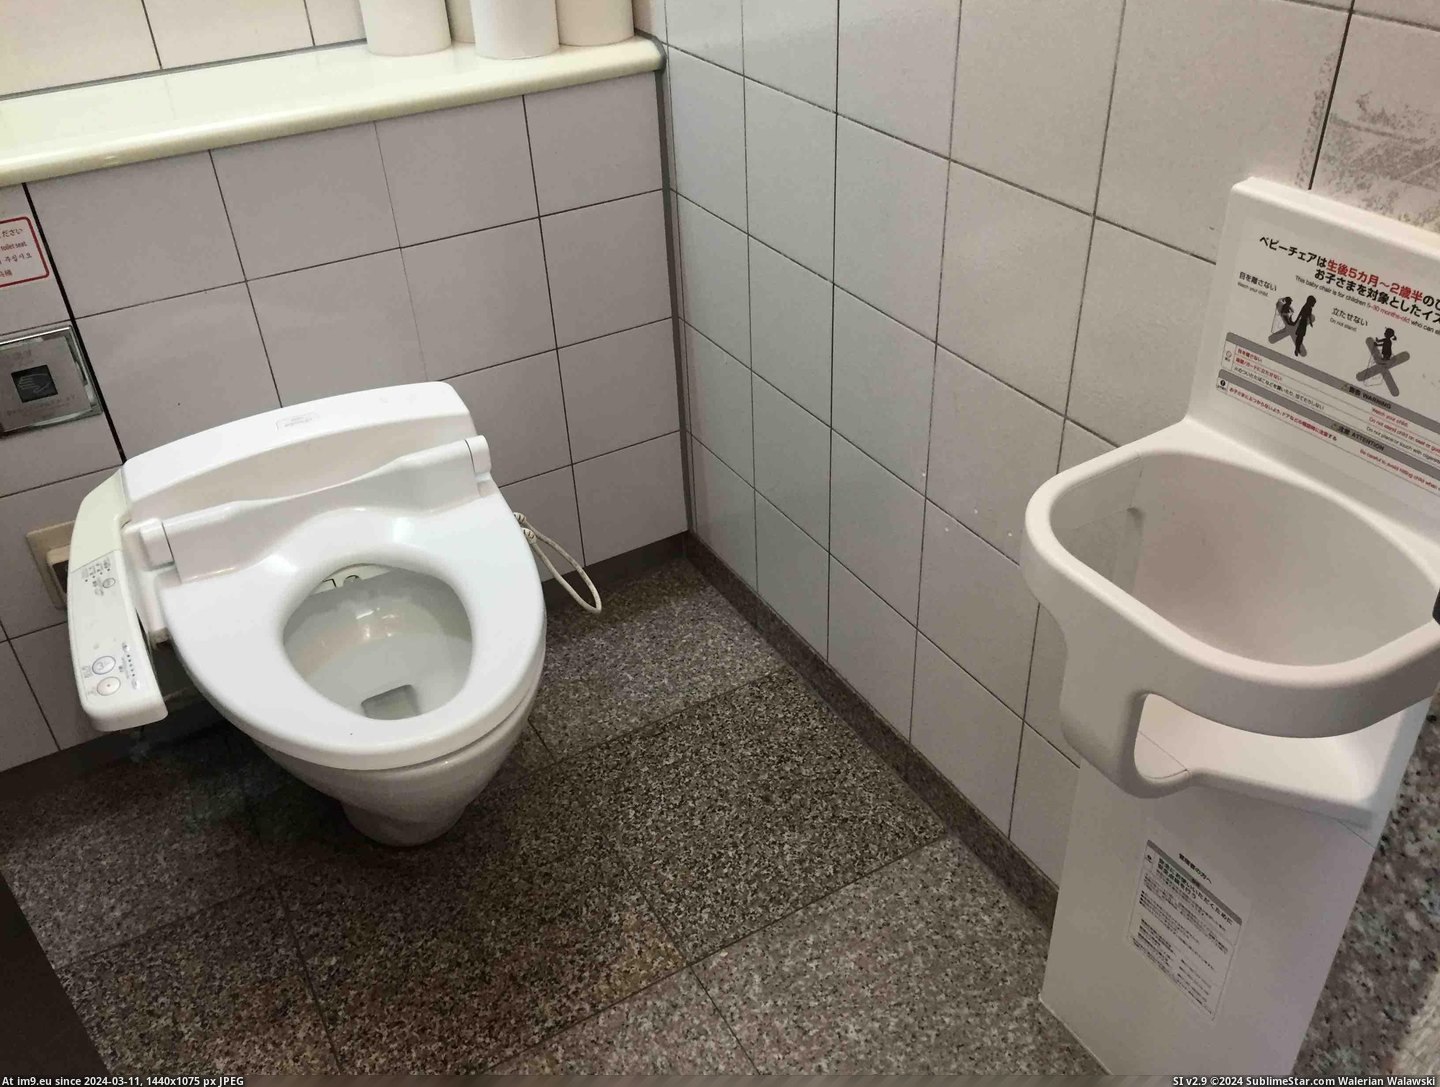 #Japan #Toilet #Child #Place [Mildlyinteresting] This toilet in Japan has a place to put your child. Pic. (Obraz z album My r/MILDLYINTERESTING favs))